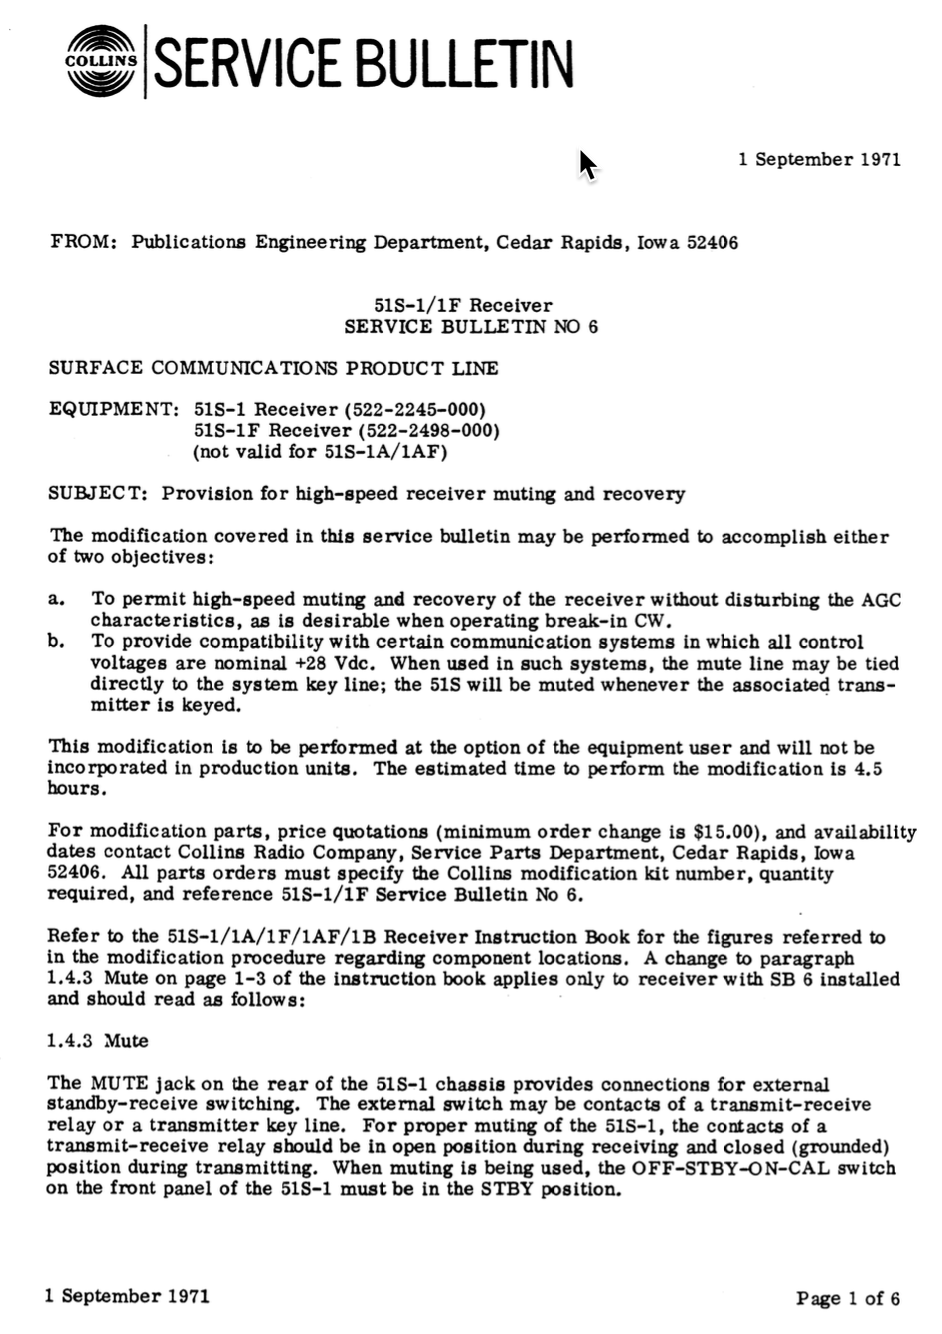 Collins 51S-1 Receiver - Service Bulletin Number 6 (1971-09)